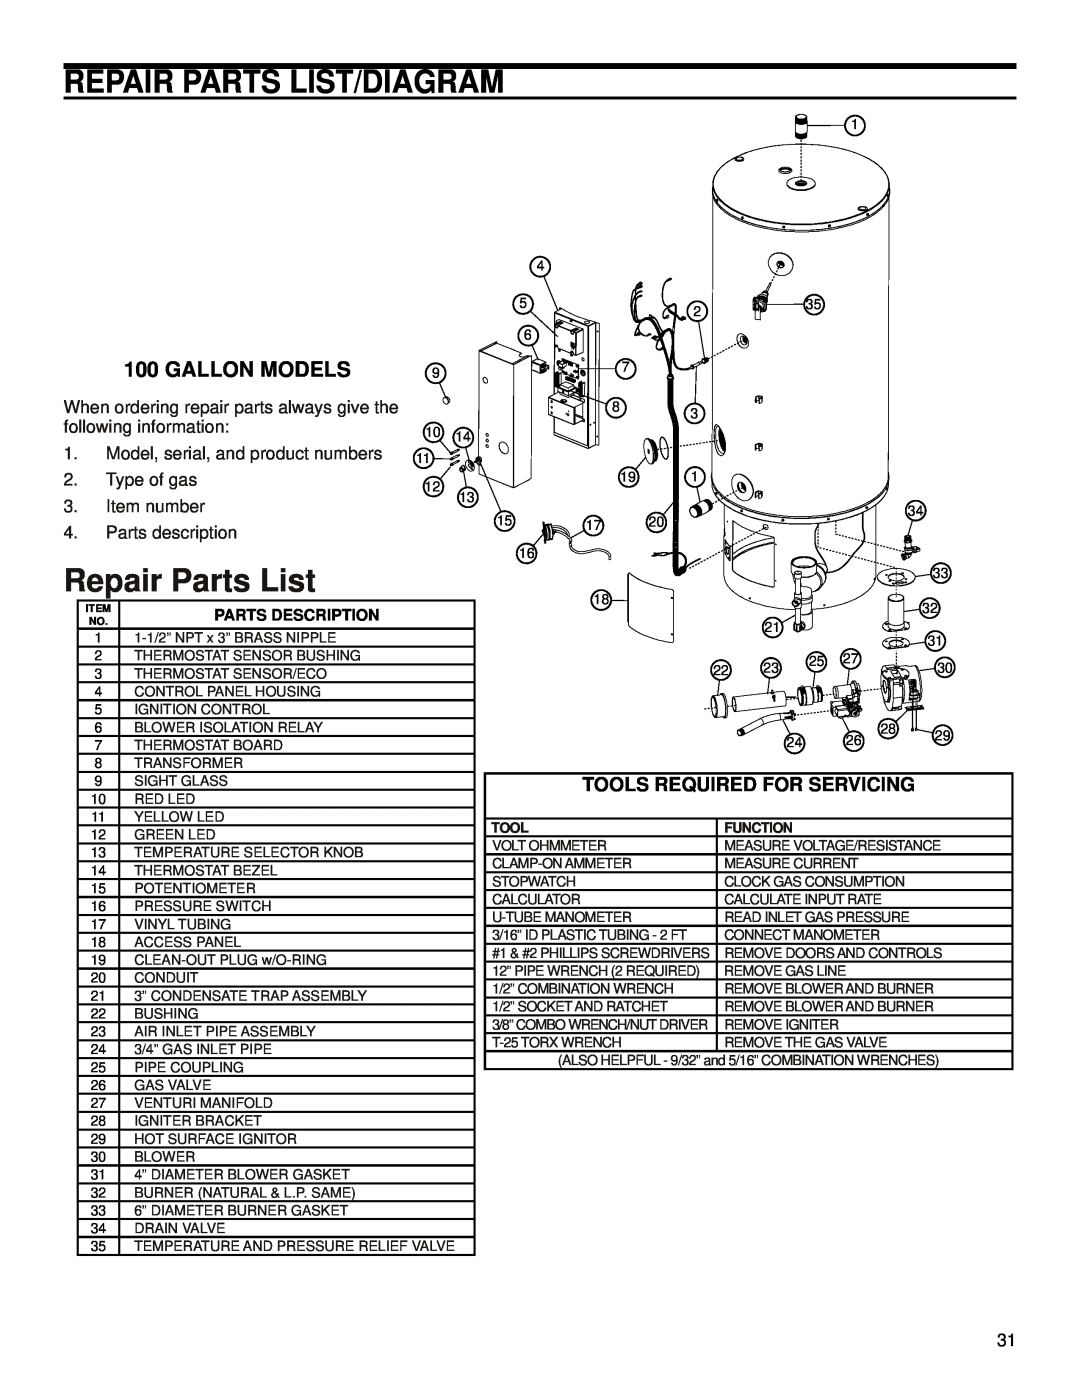 Polaris PR 175-50 3NV OR 3PV Repair Parts List/Diagram, Tools Required For Servicing, Parts Description, Function 